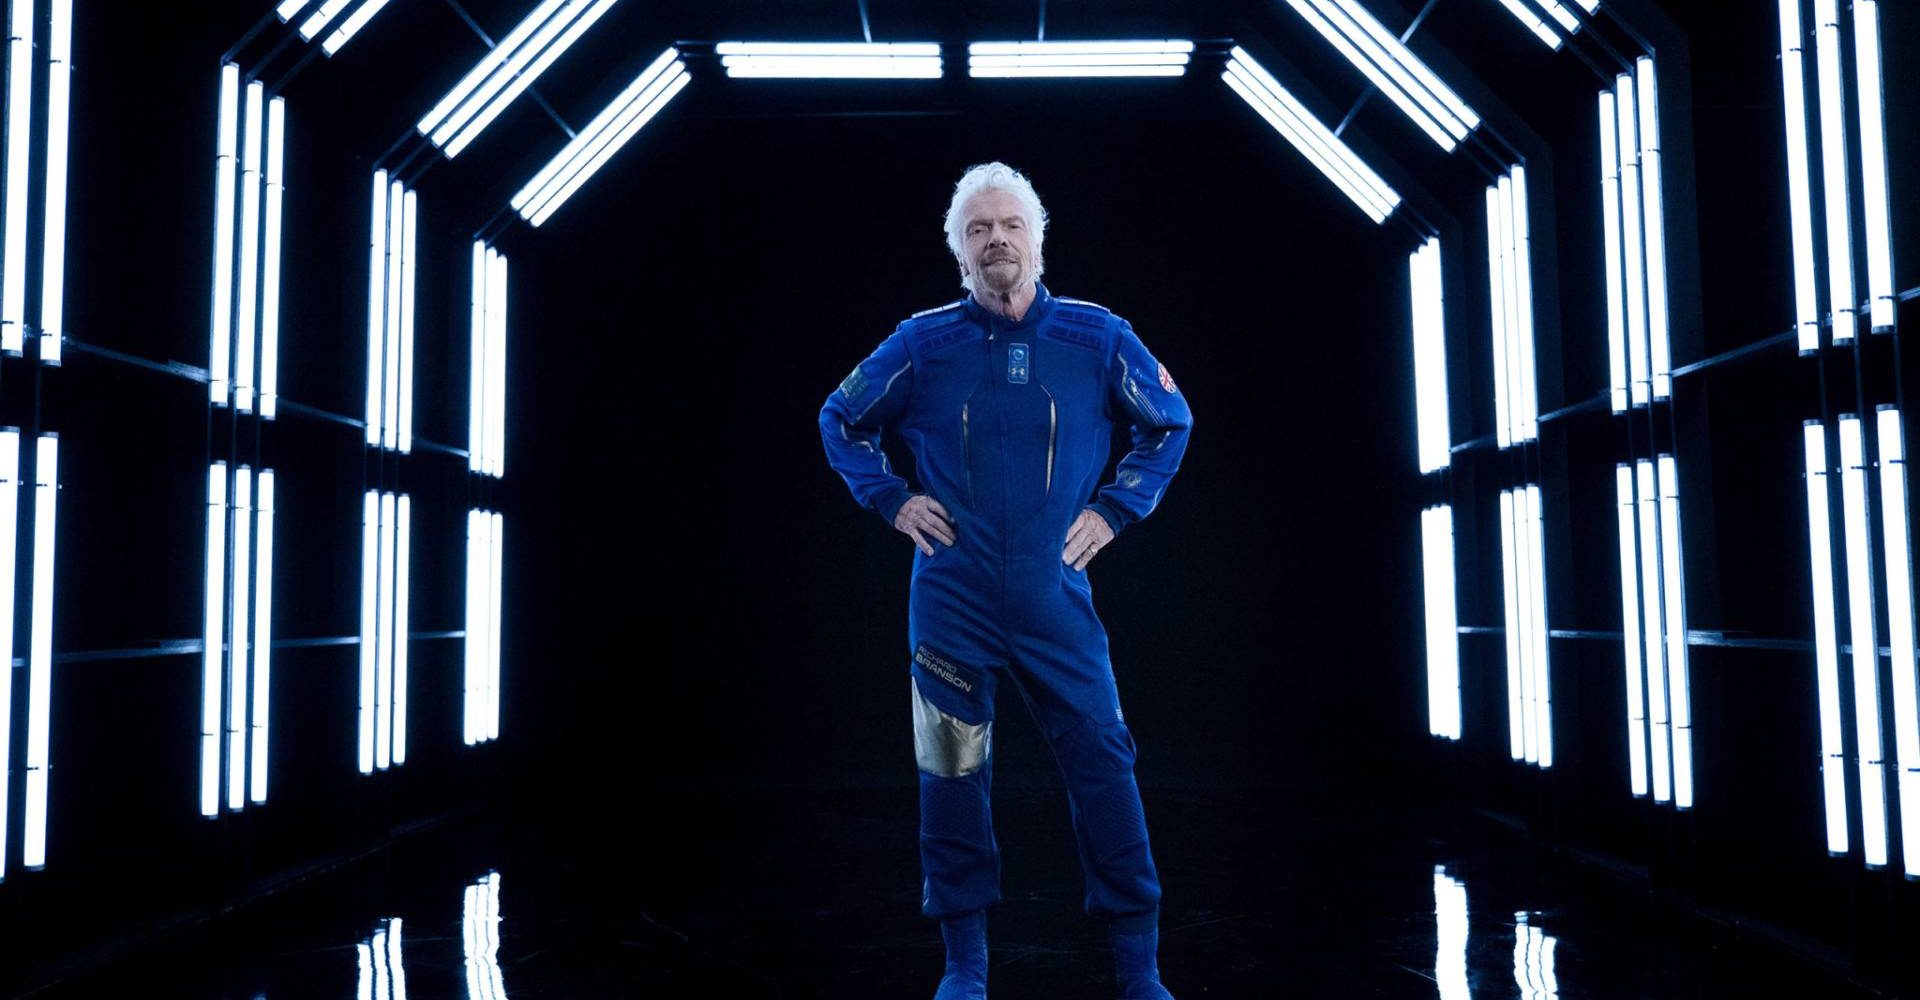 Richard Branson spacesuit